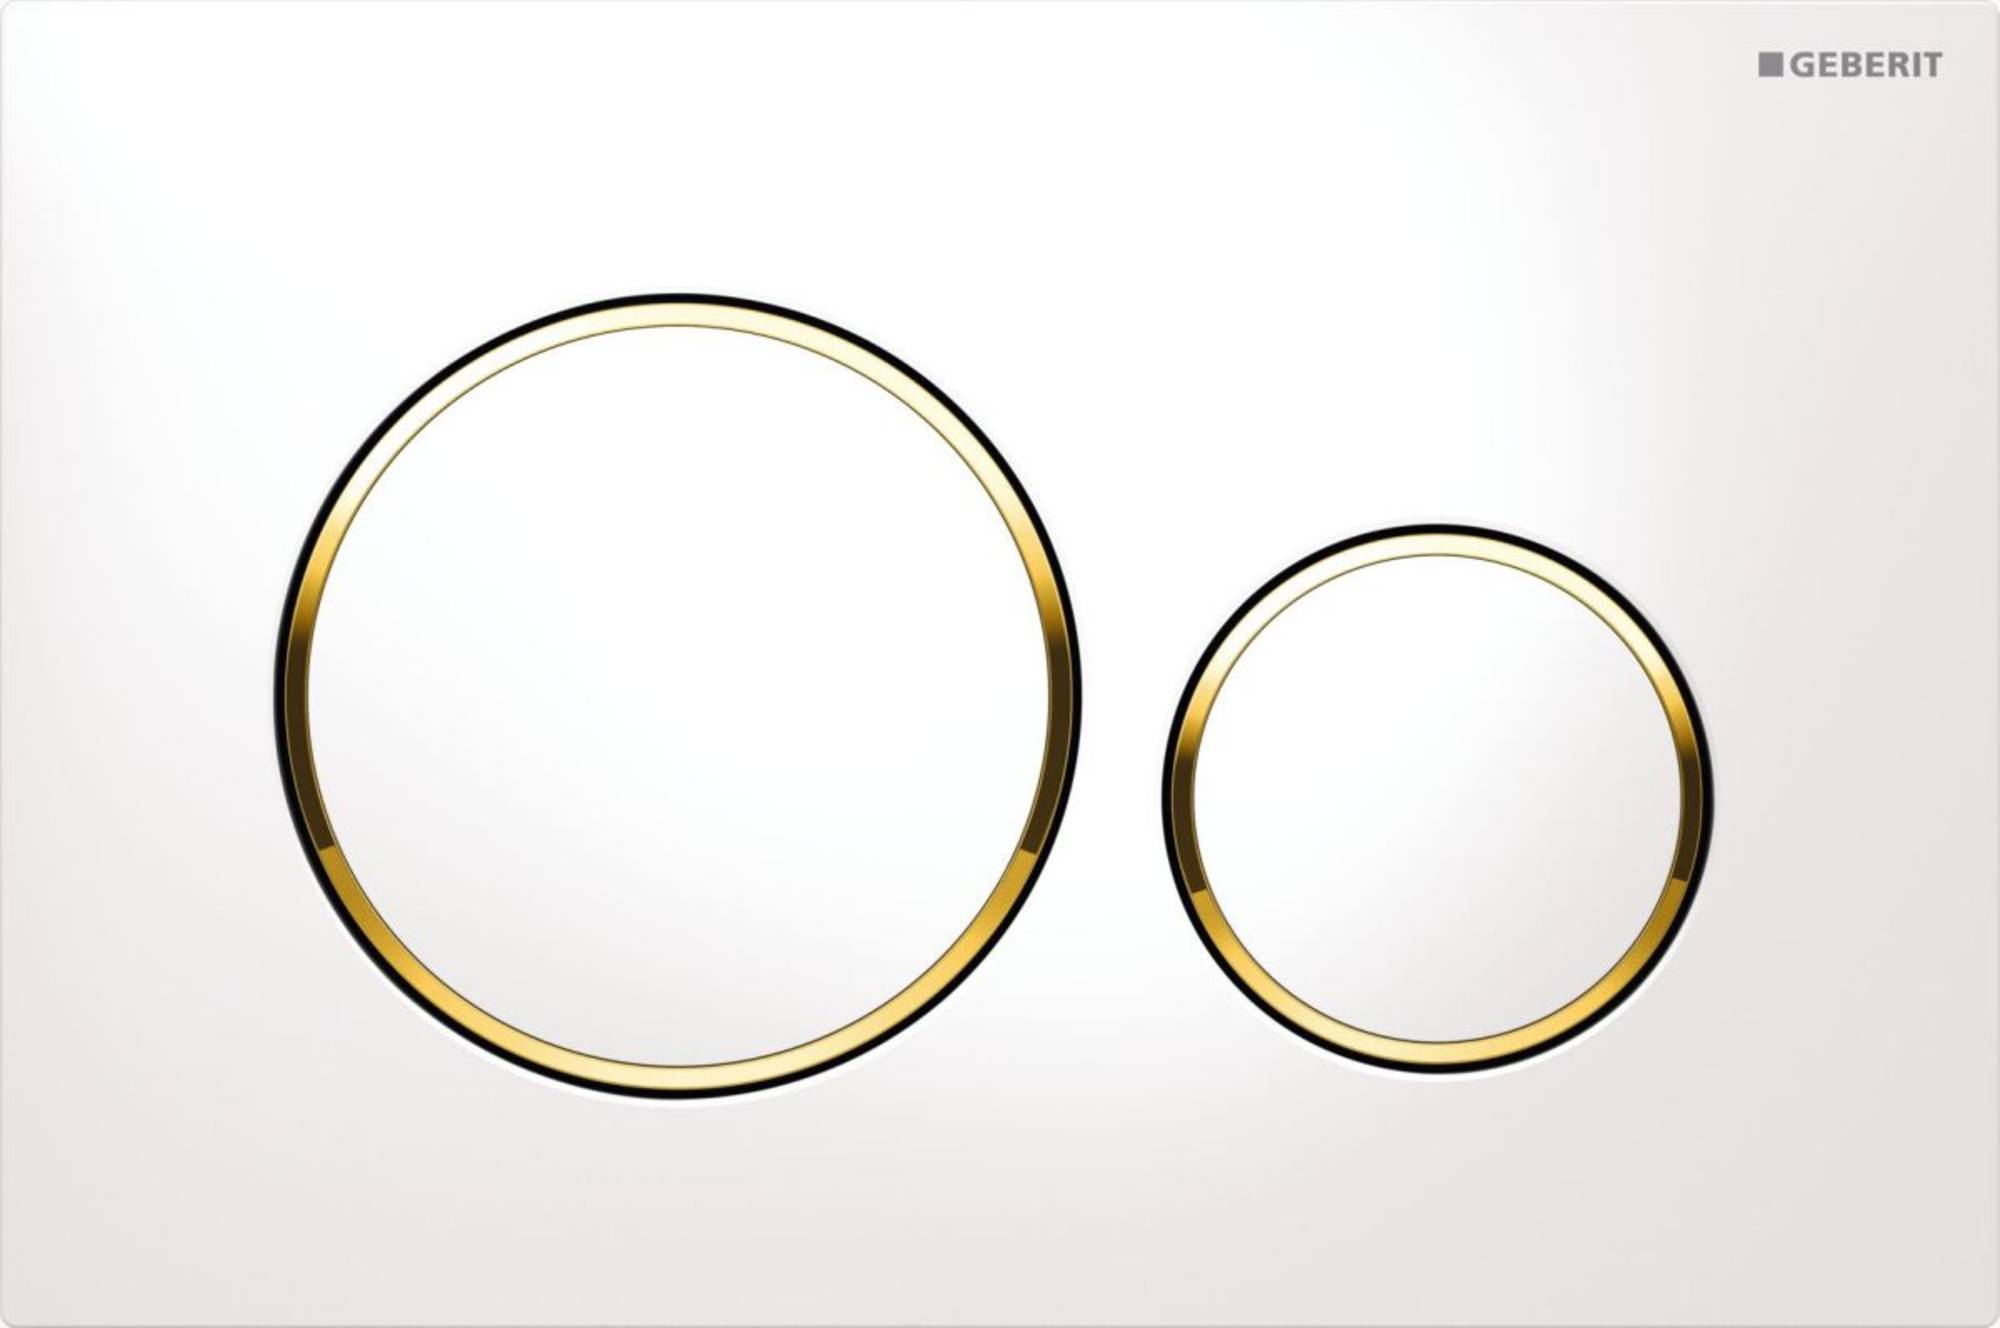 Geberit Sigma 20 bedieningsplaat kleuren:plaat-ring-knop Wit-Goud-Wit